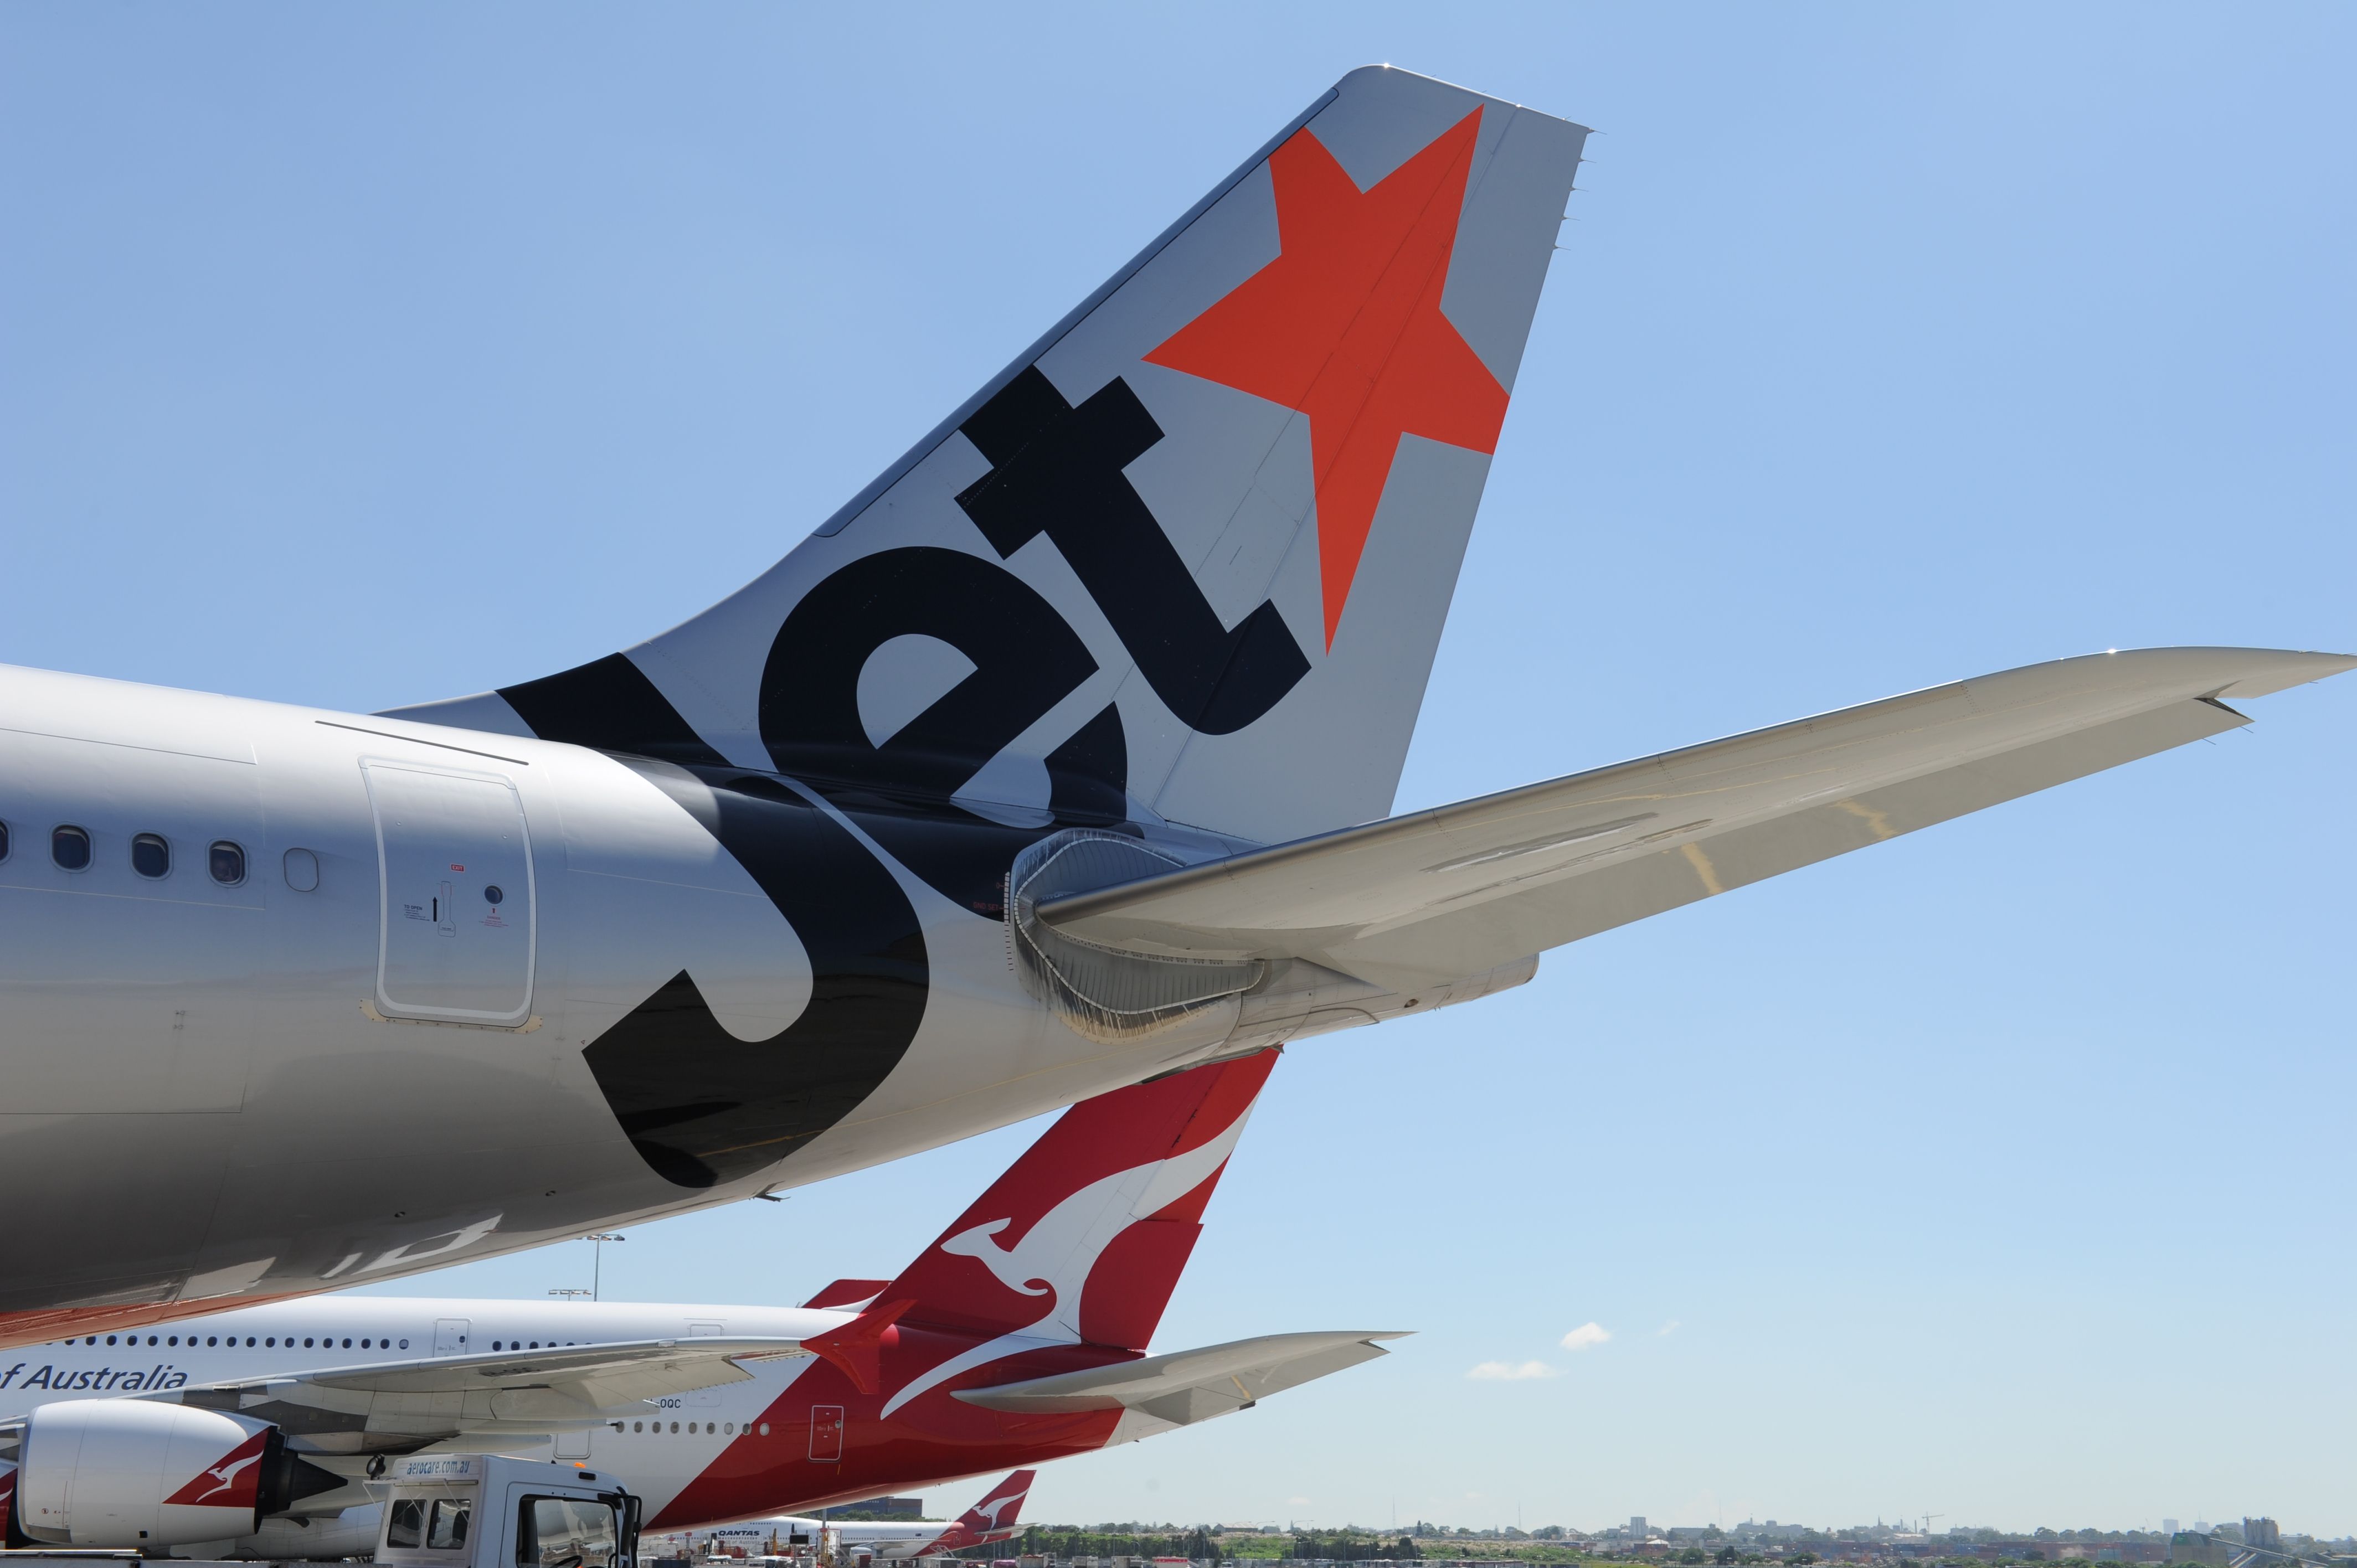 The Qantas Group includes both Qantas and Jetstar